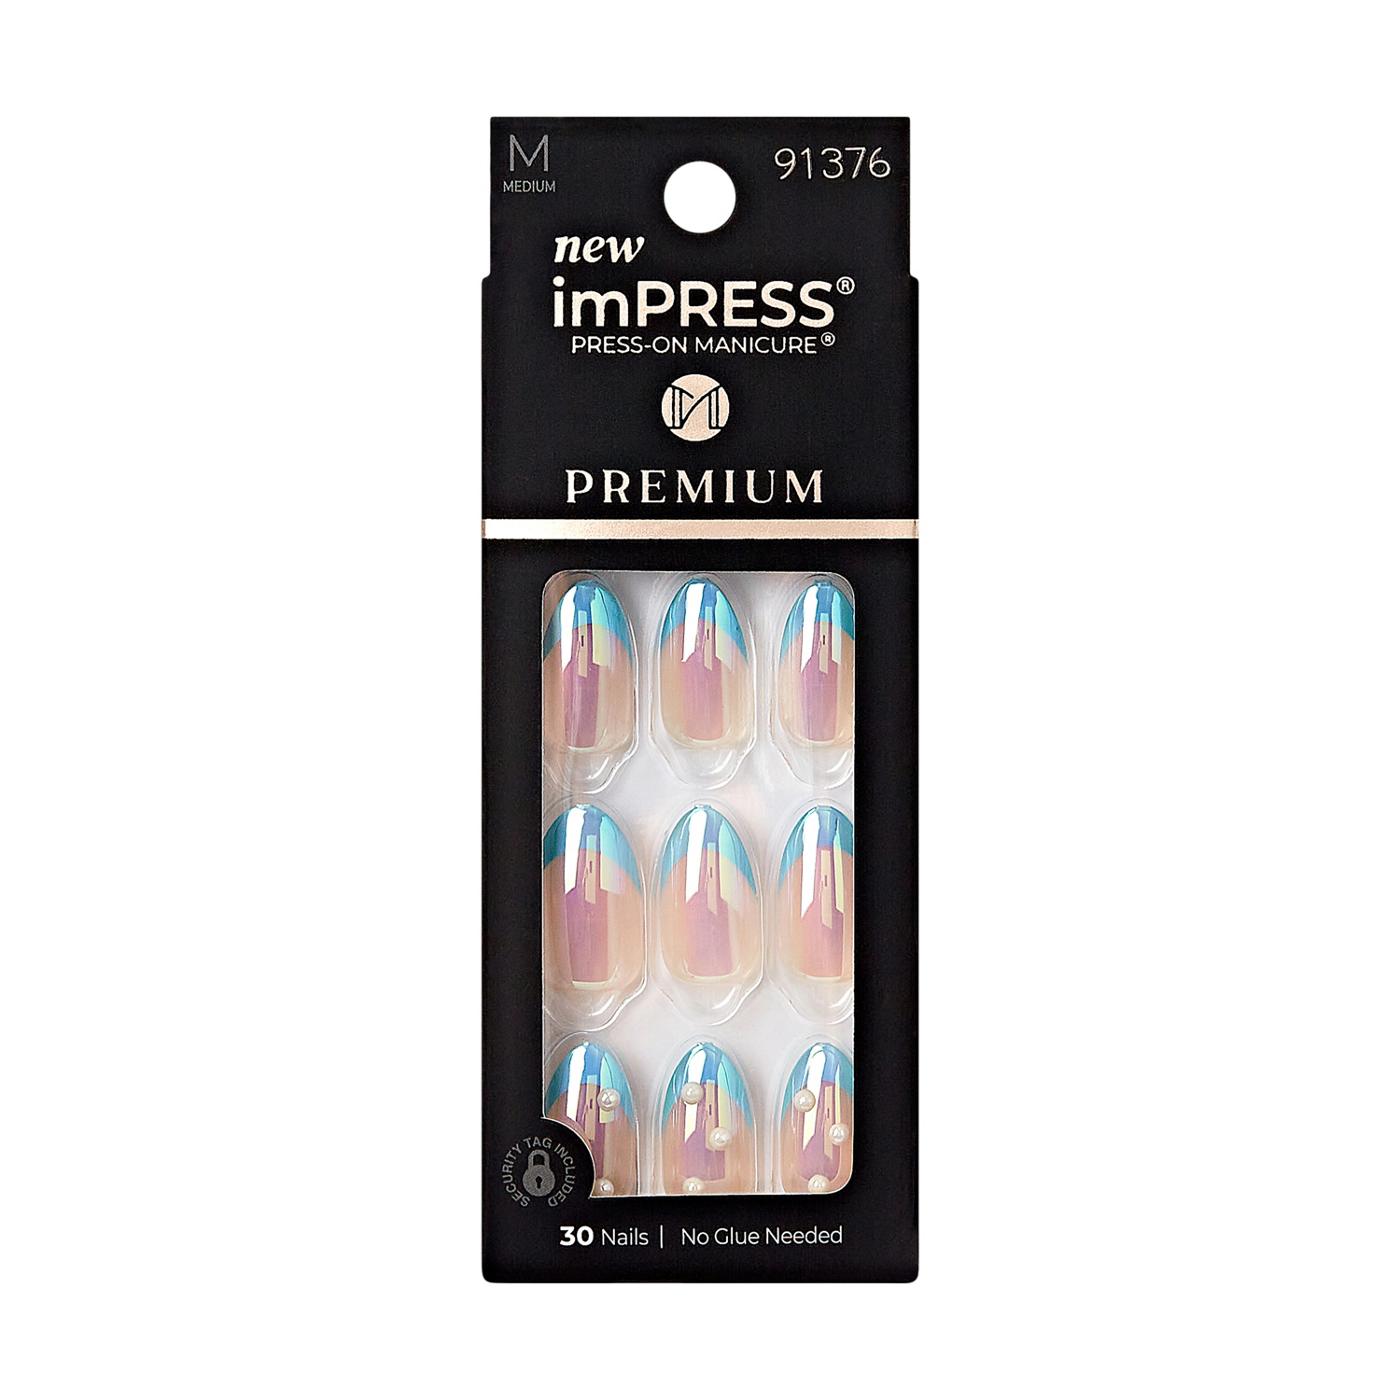 KISS imPRESS Premium Press-On Manicure - Best Life; image 1 of 5